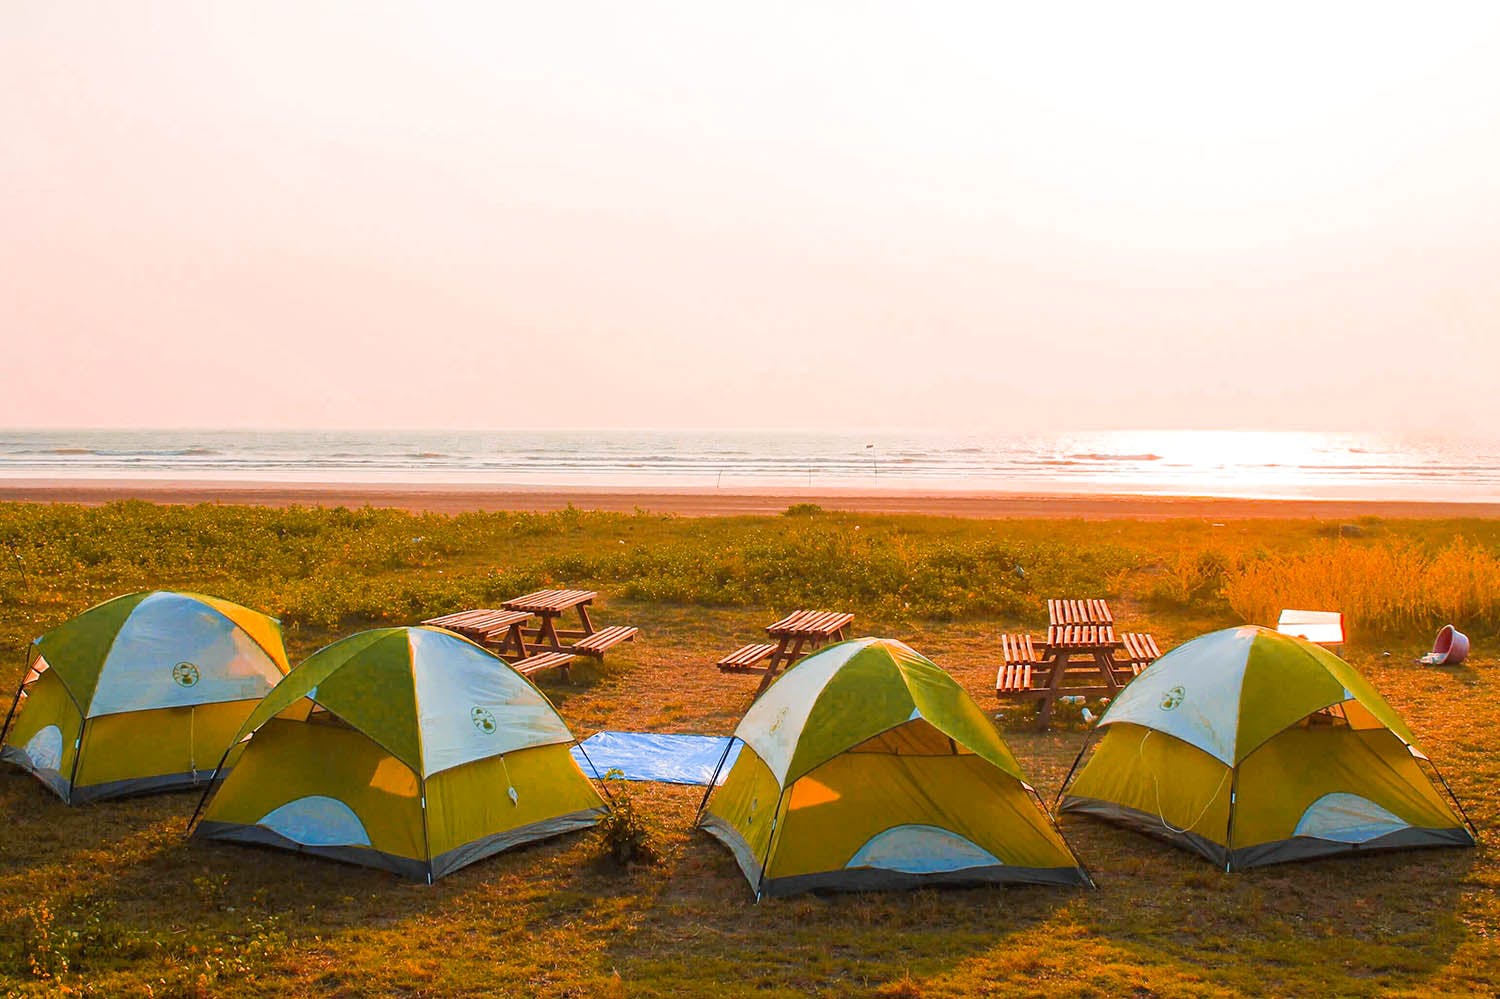 Camping,Tent,Ecoregion,Landscape,Sky,Beach,Sand,Recreation,Coast,Vacation